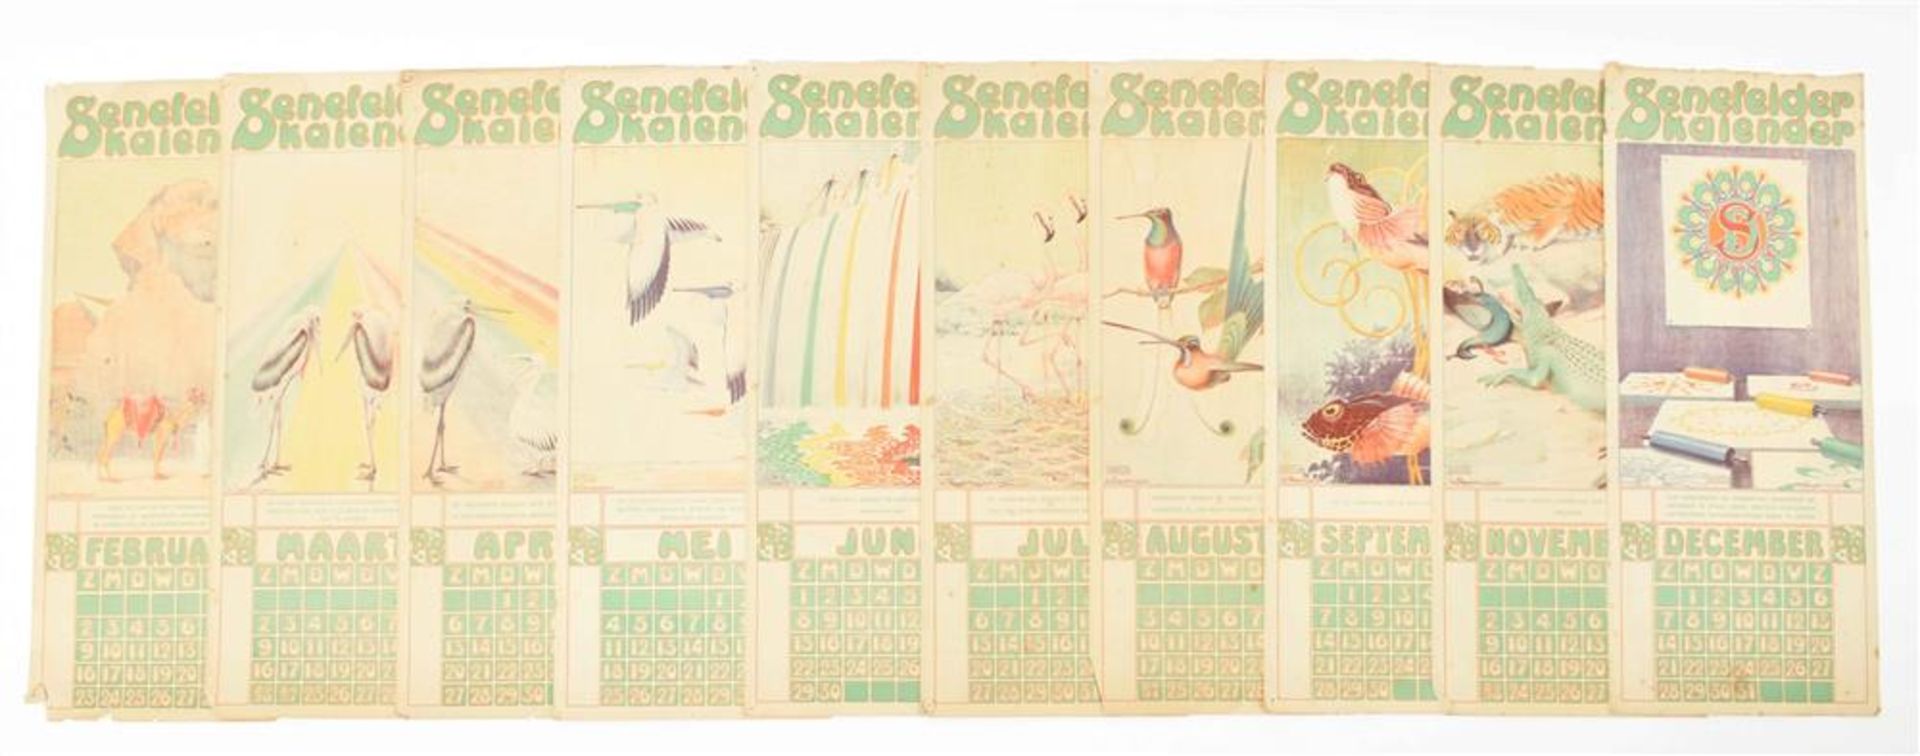 [Calendars] Five early twentieth century Senefelder Kalenders - Image 2 of 9